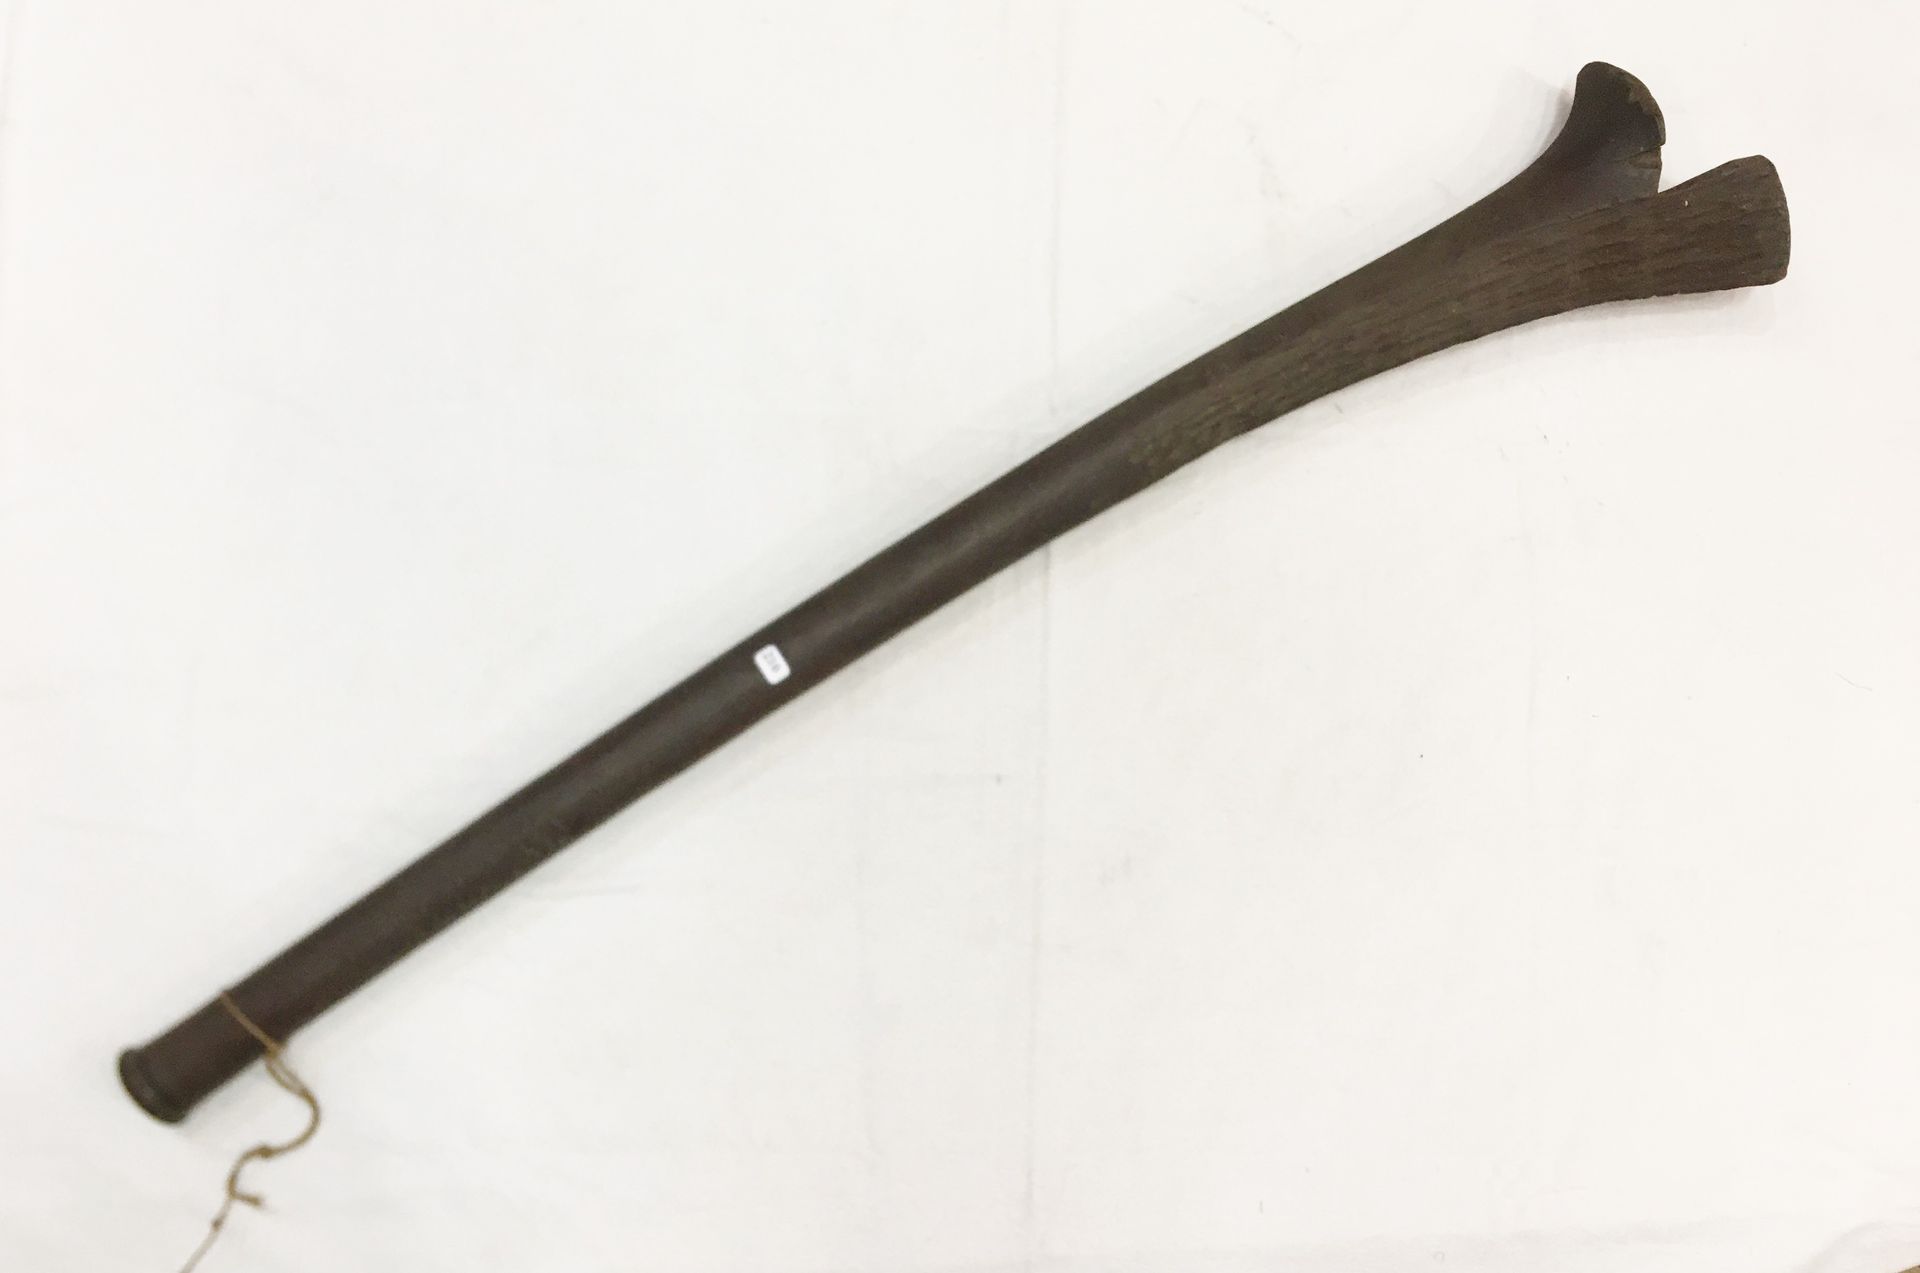 Null 盐渍 "俱乐部斐济群岛。狼牙棒被雕刻成 "步枪枪托"。硬木，有使用过的旧斑纹。长：85厘米